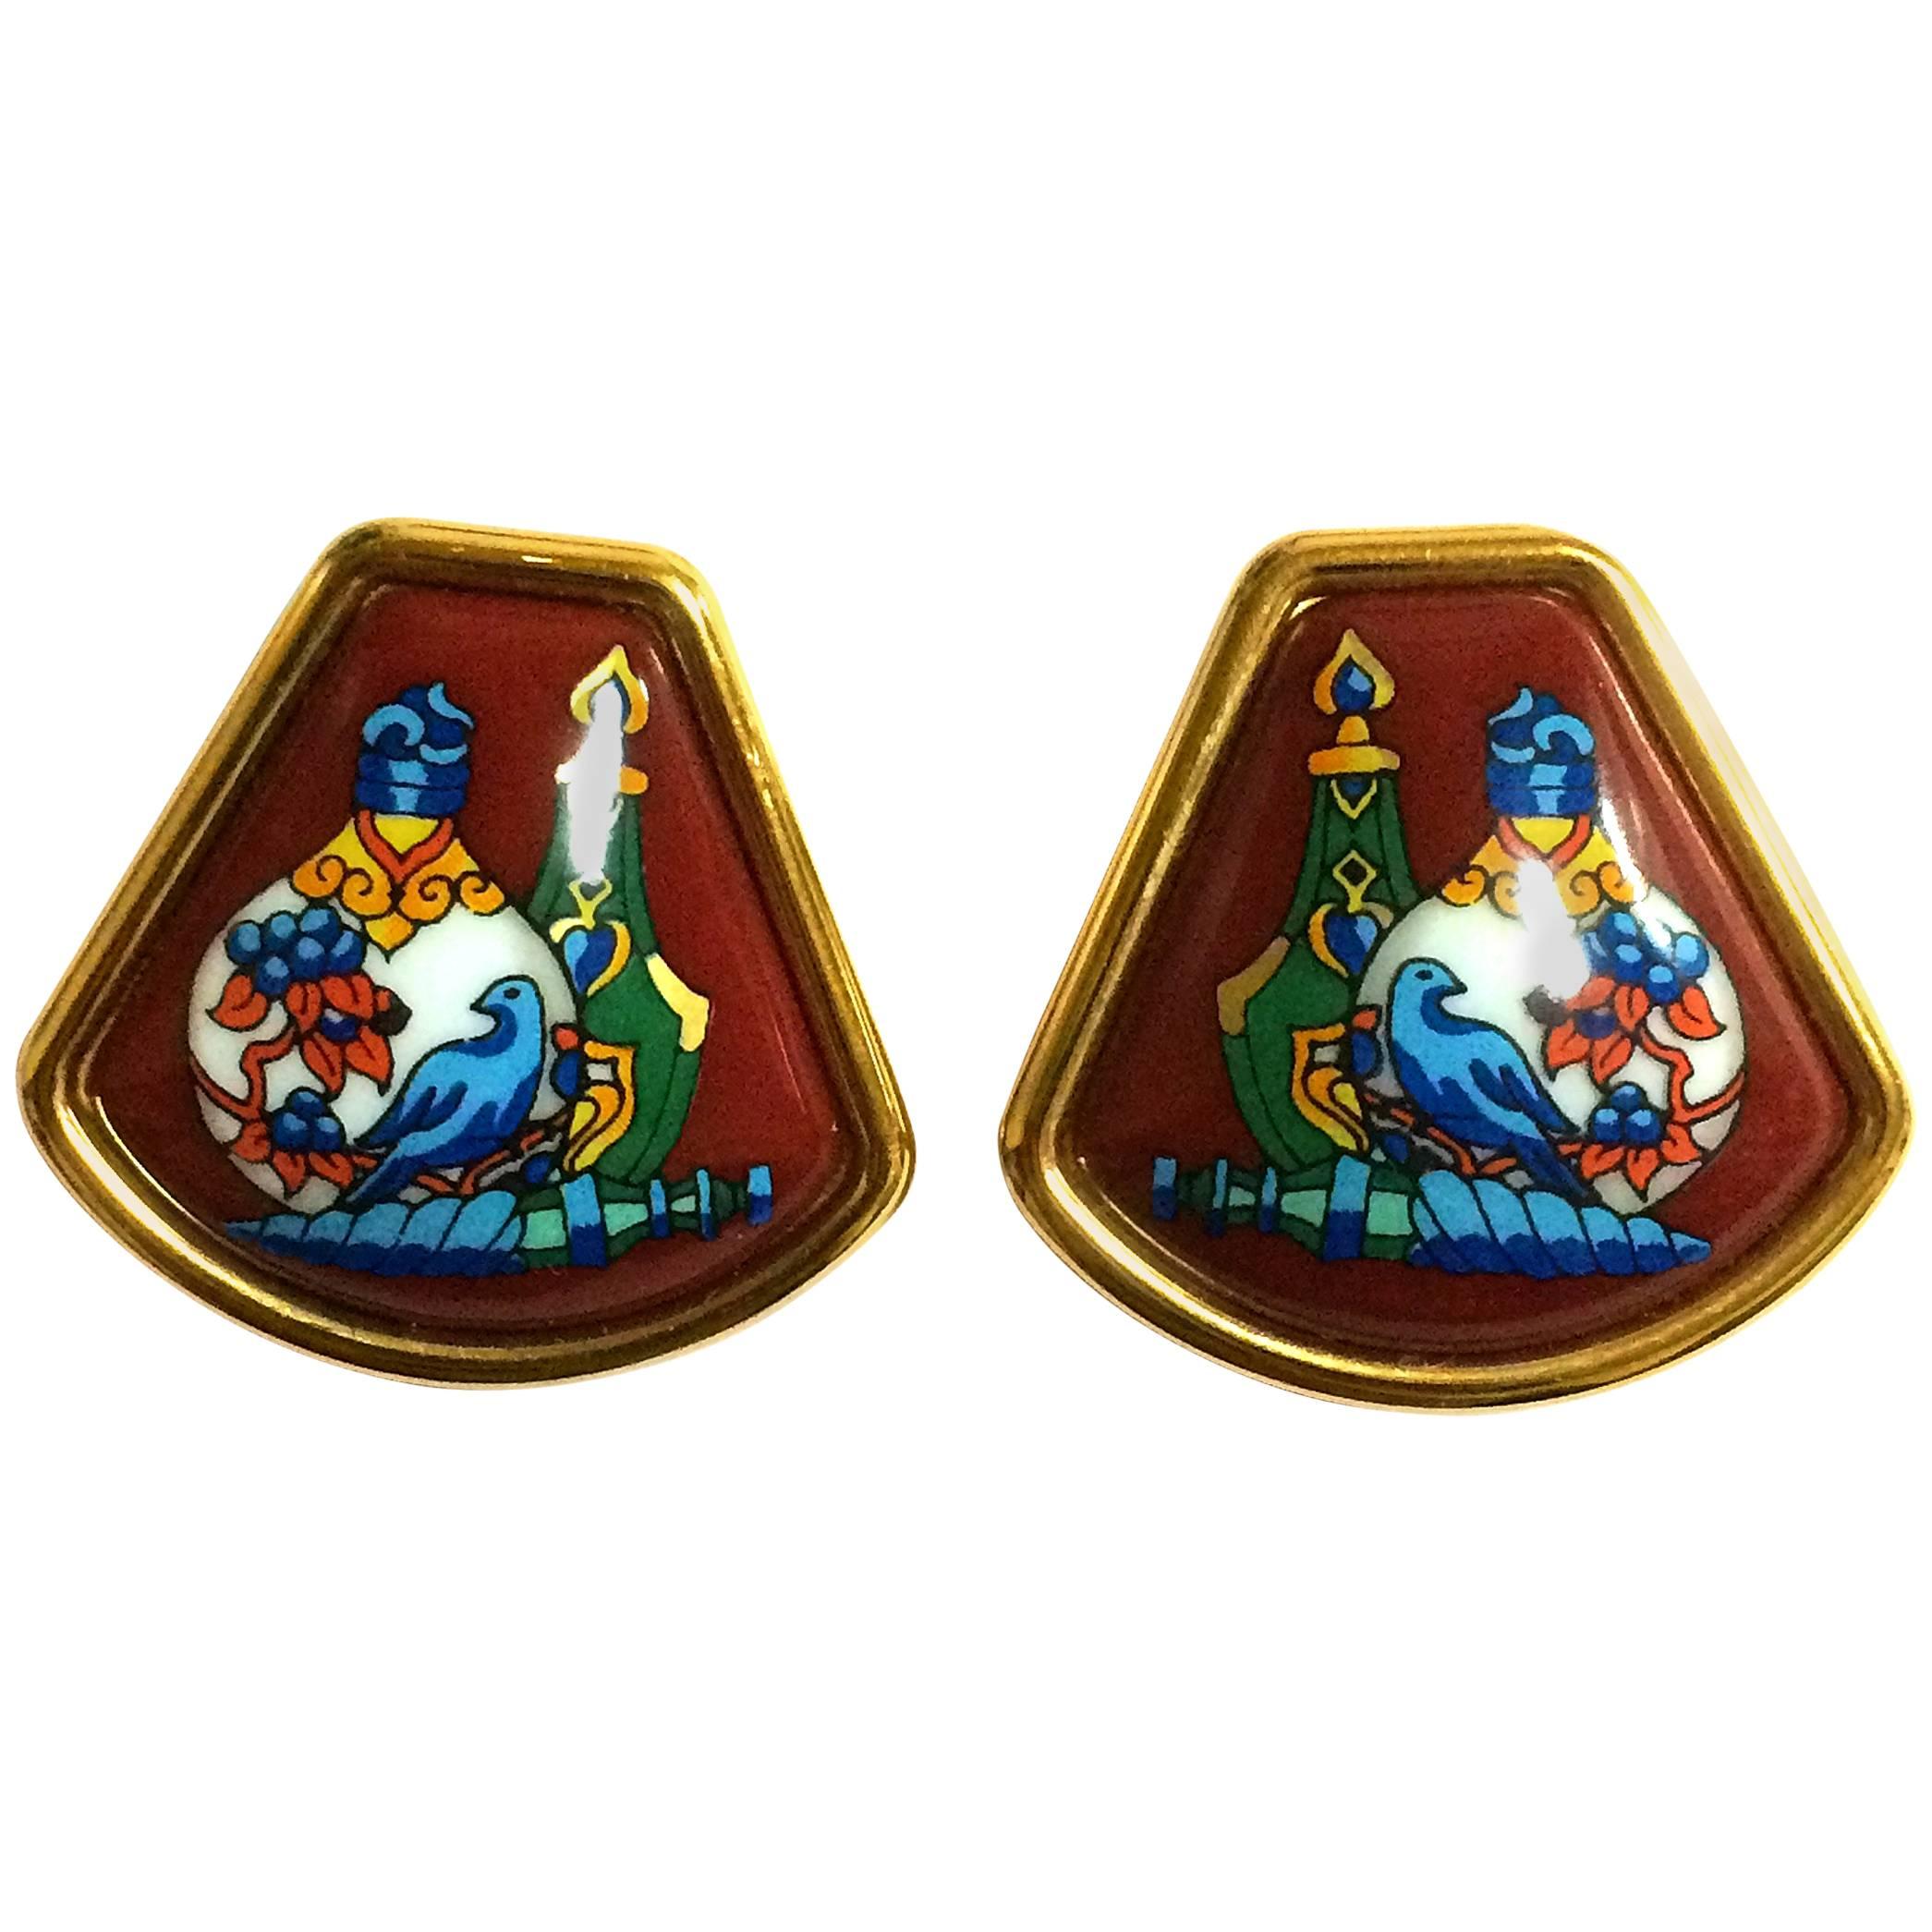 Vintage Hermes cloisonne golden earrings with colorful perfume bottle design.